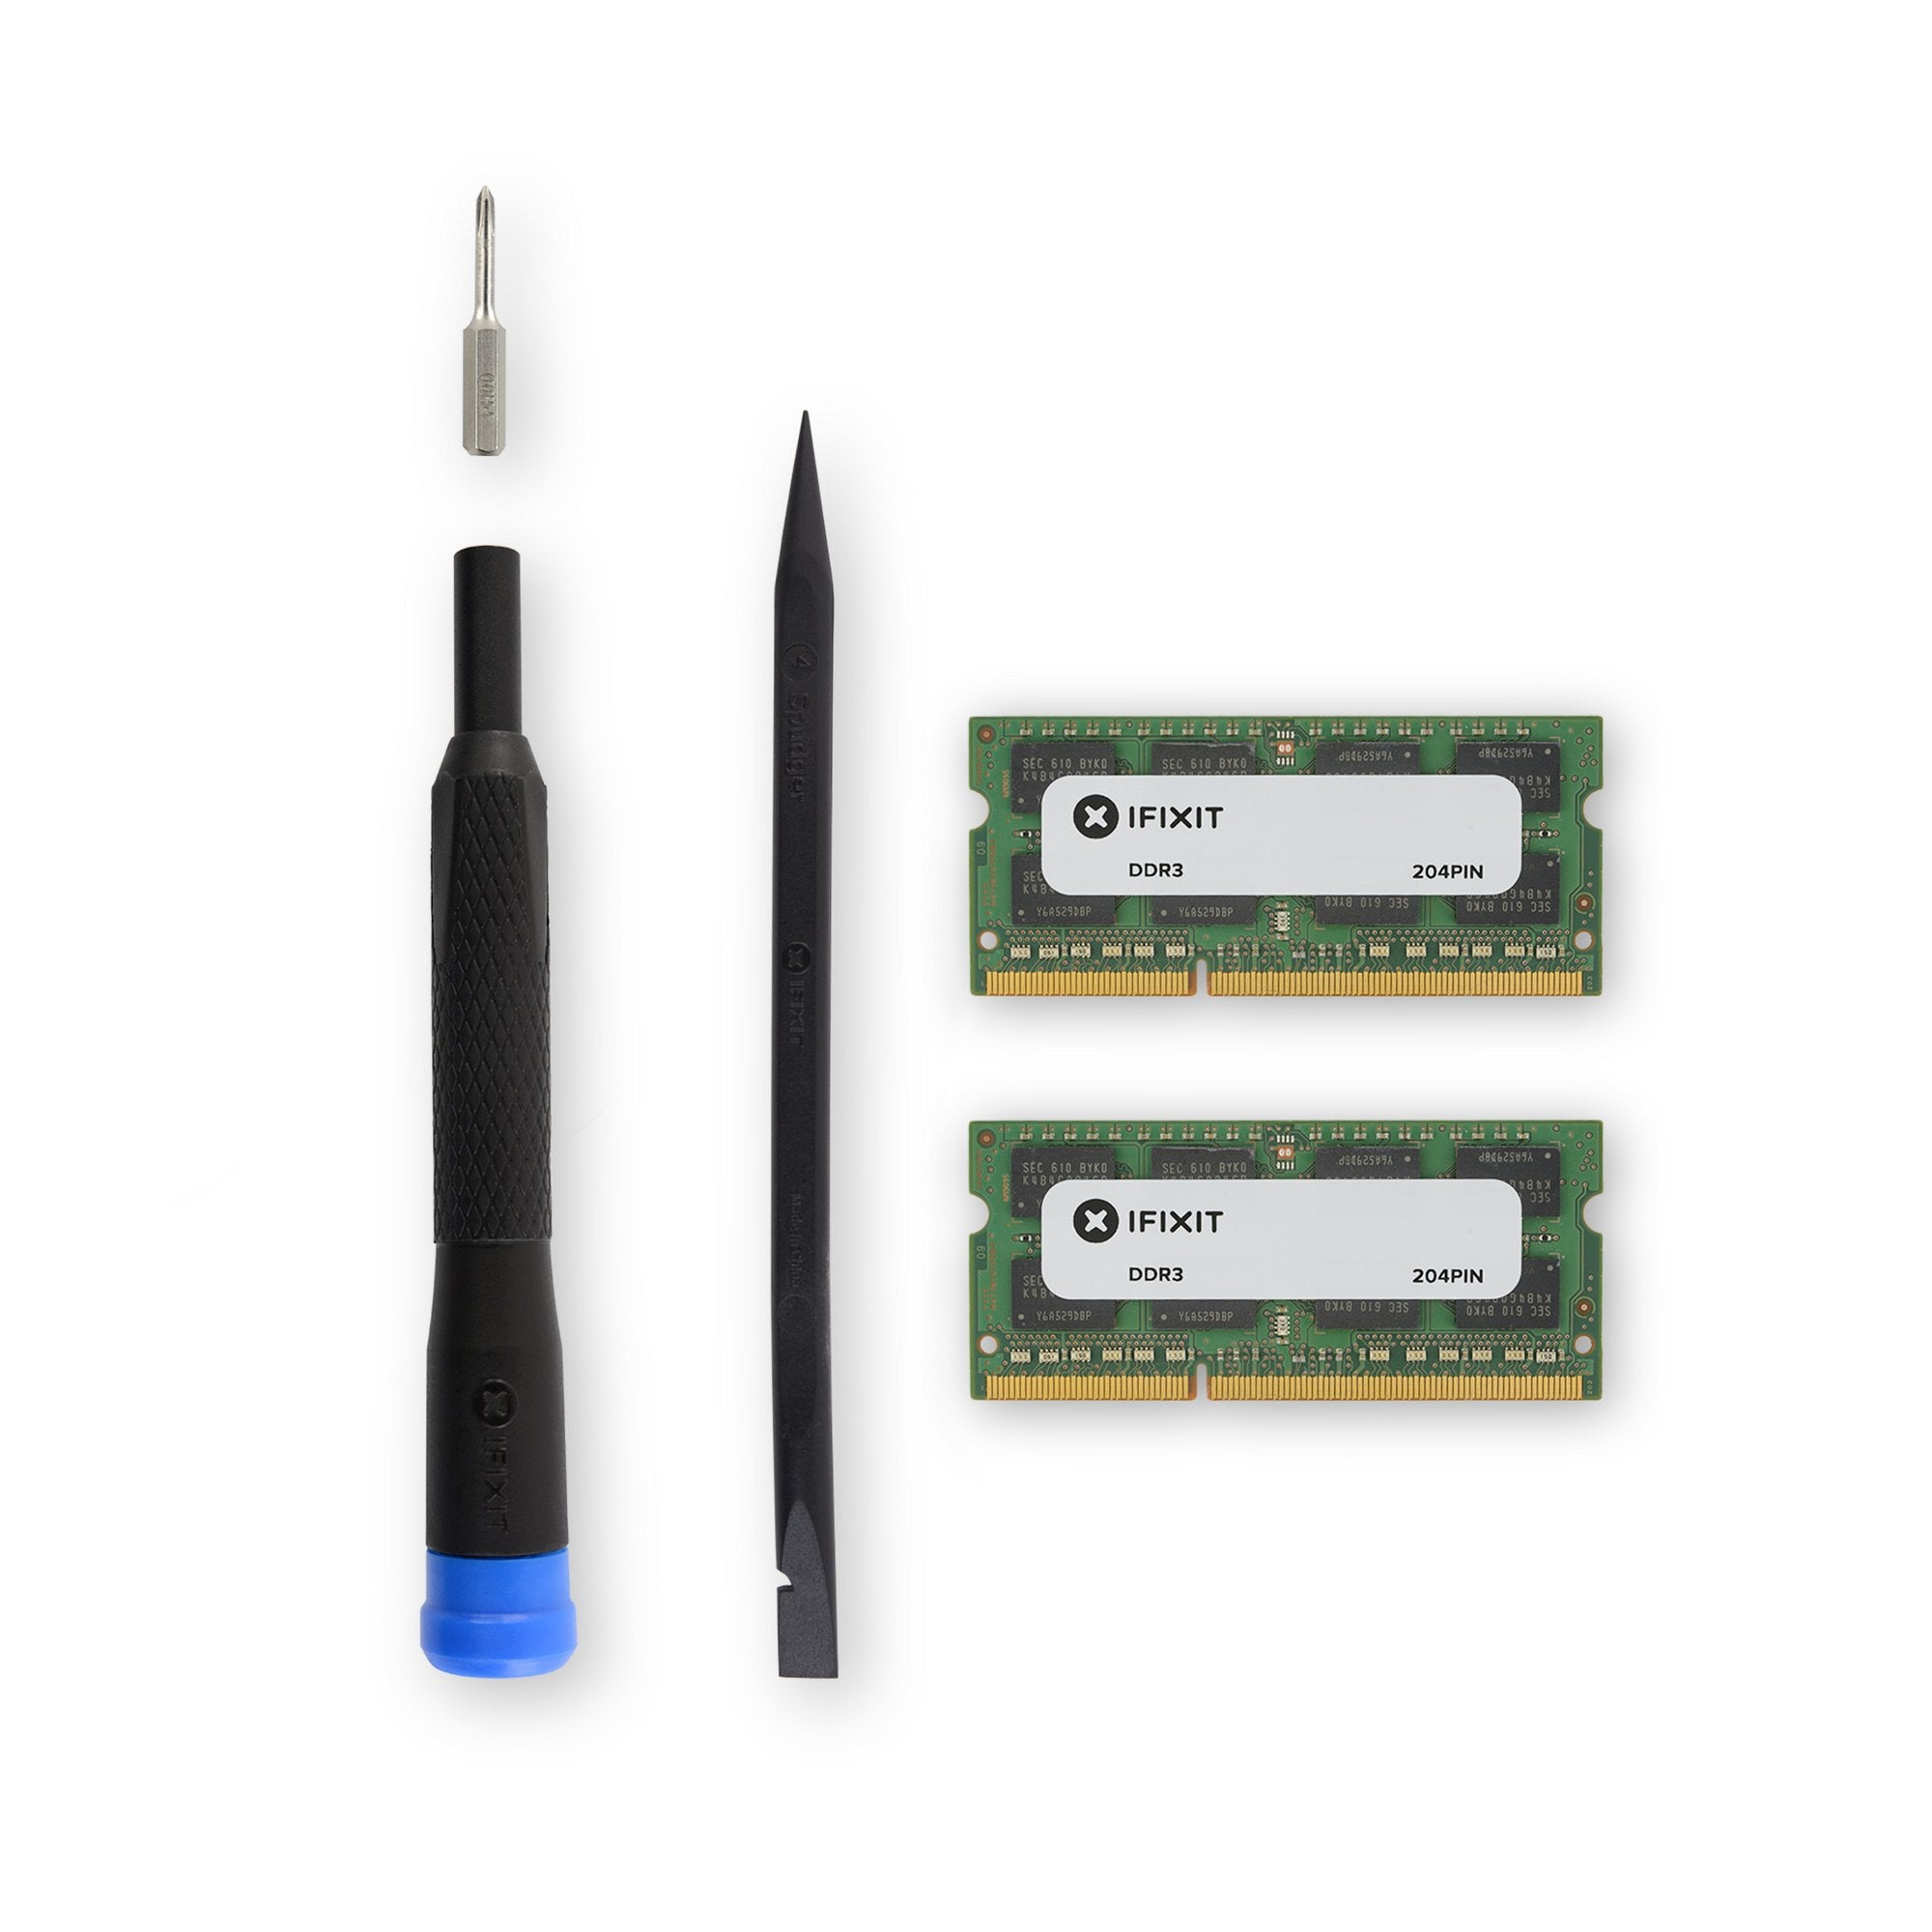 MacBook Pro 13" Unibody (Mid 2012) Memory Maxxer RAM Upgrade Kit